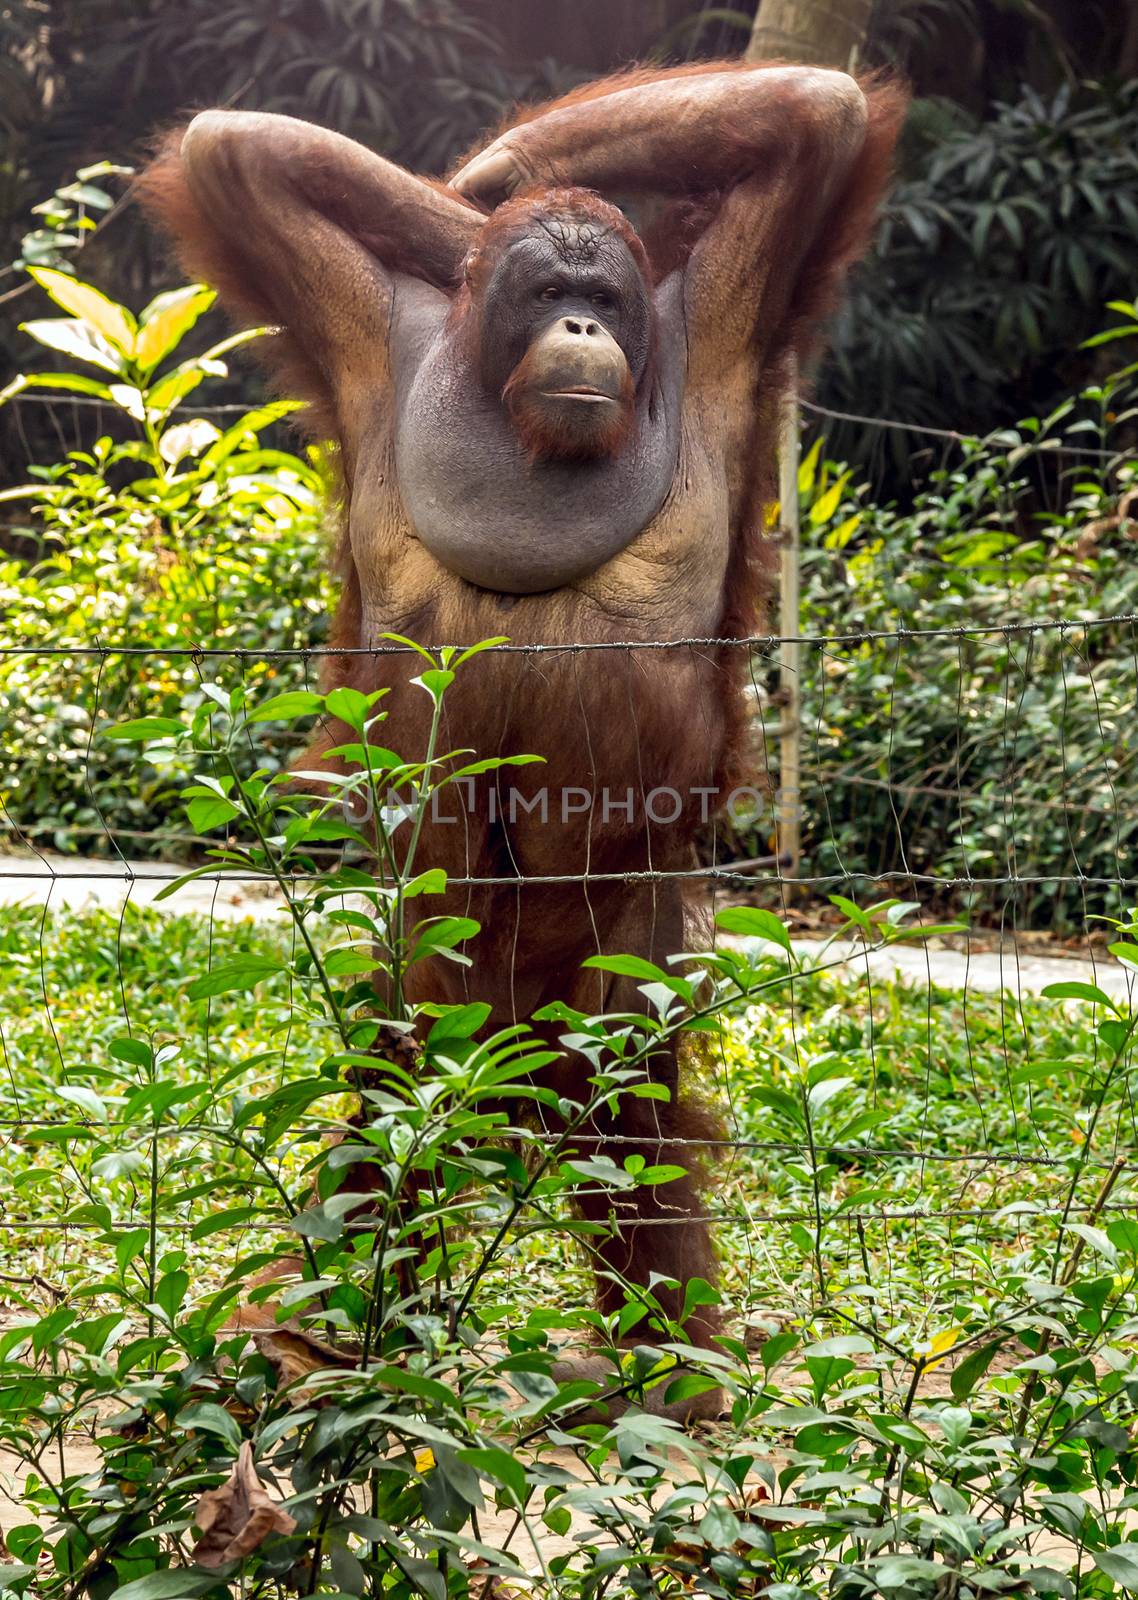 Dominant male orangutan by Vladyslav